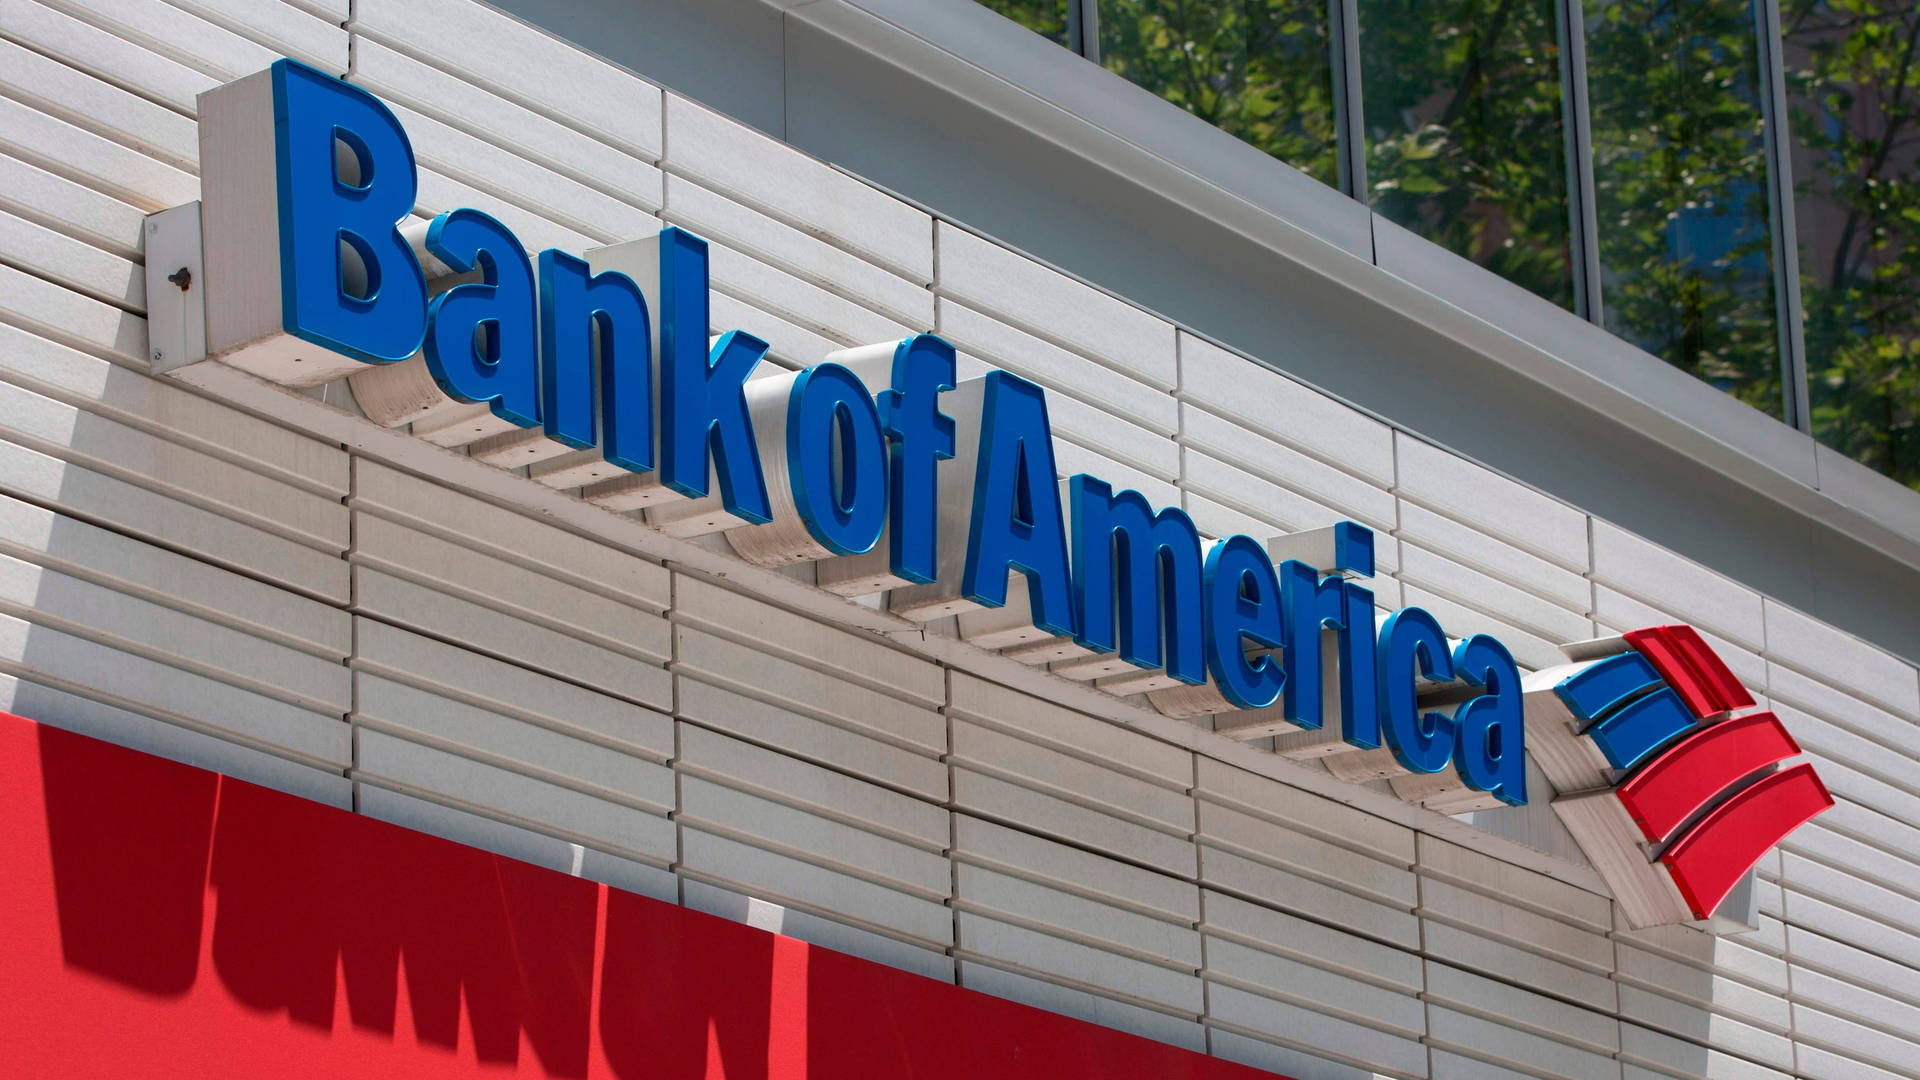 Bank Of America 3d Signage Wallpaper